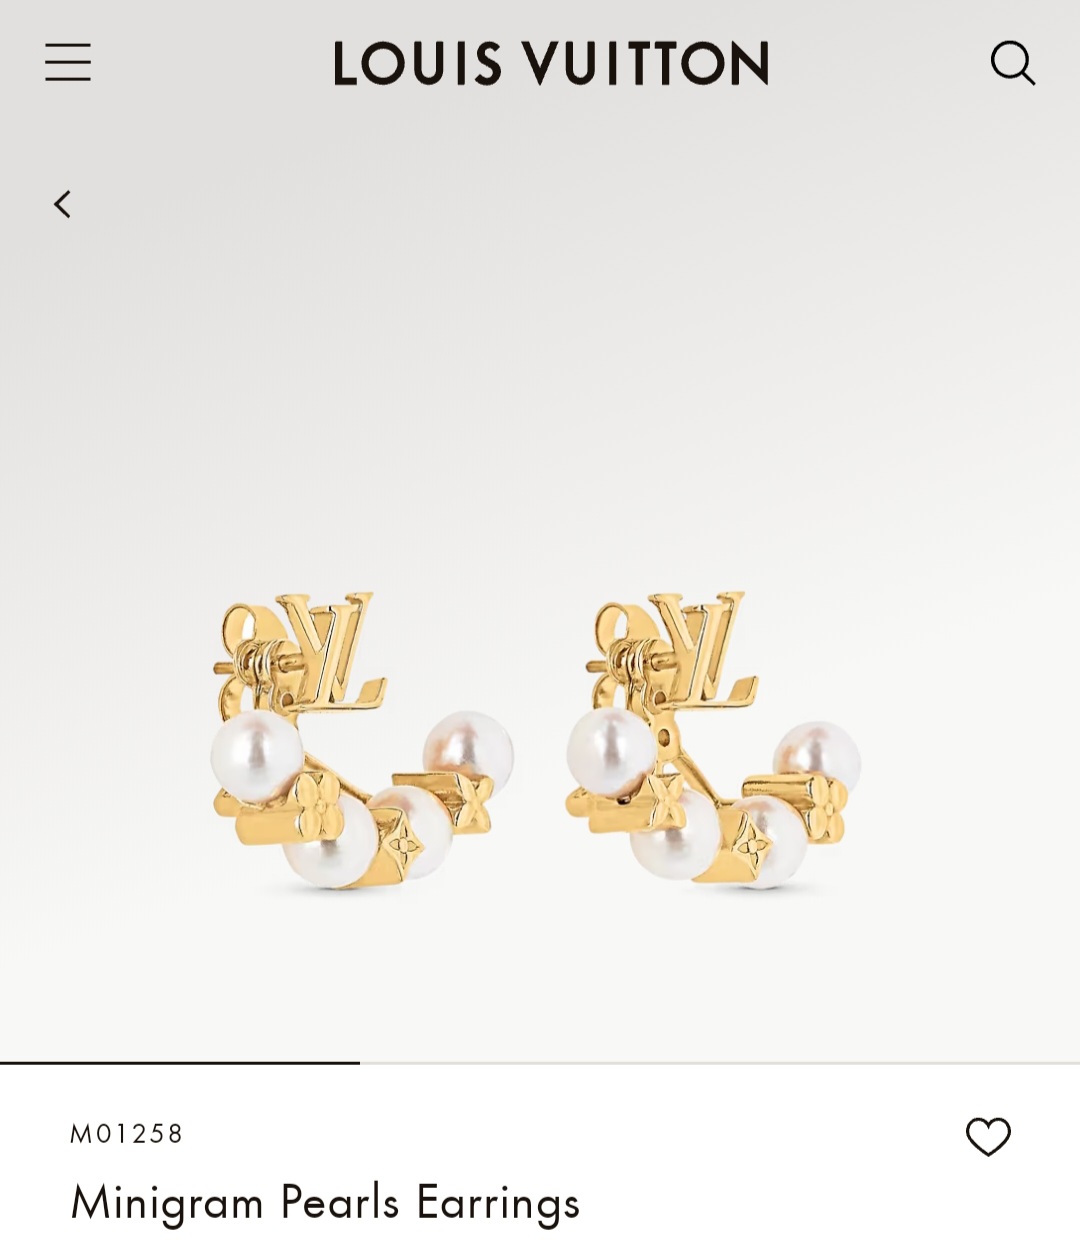 LV Minigram Pearls earrings